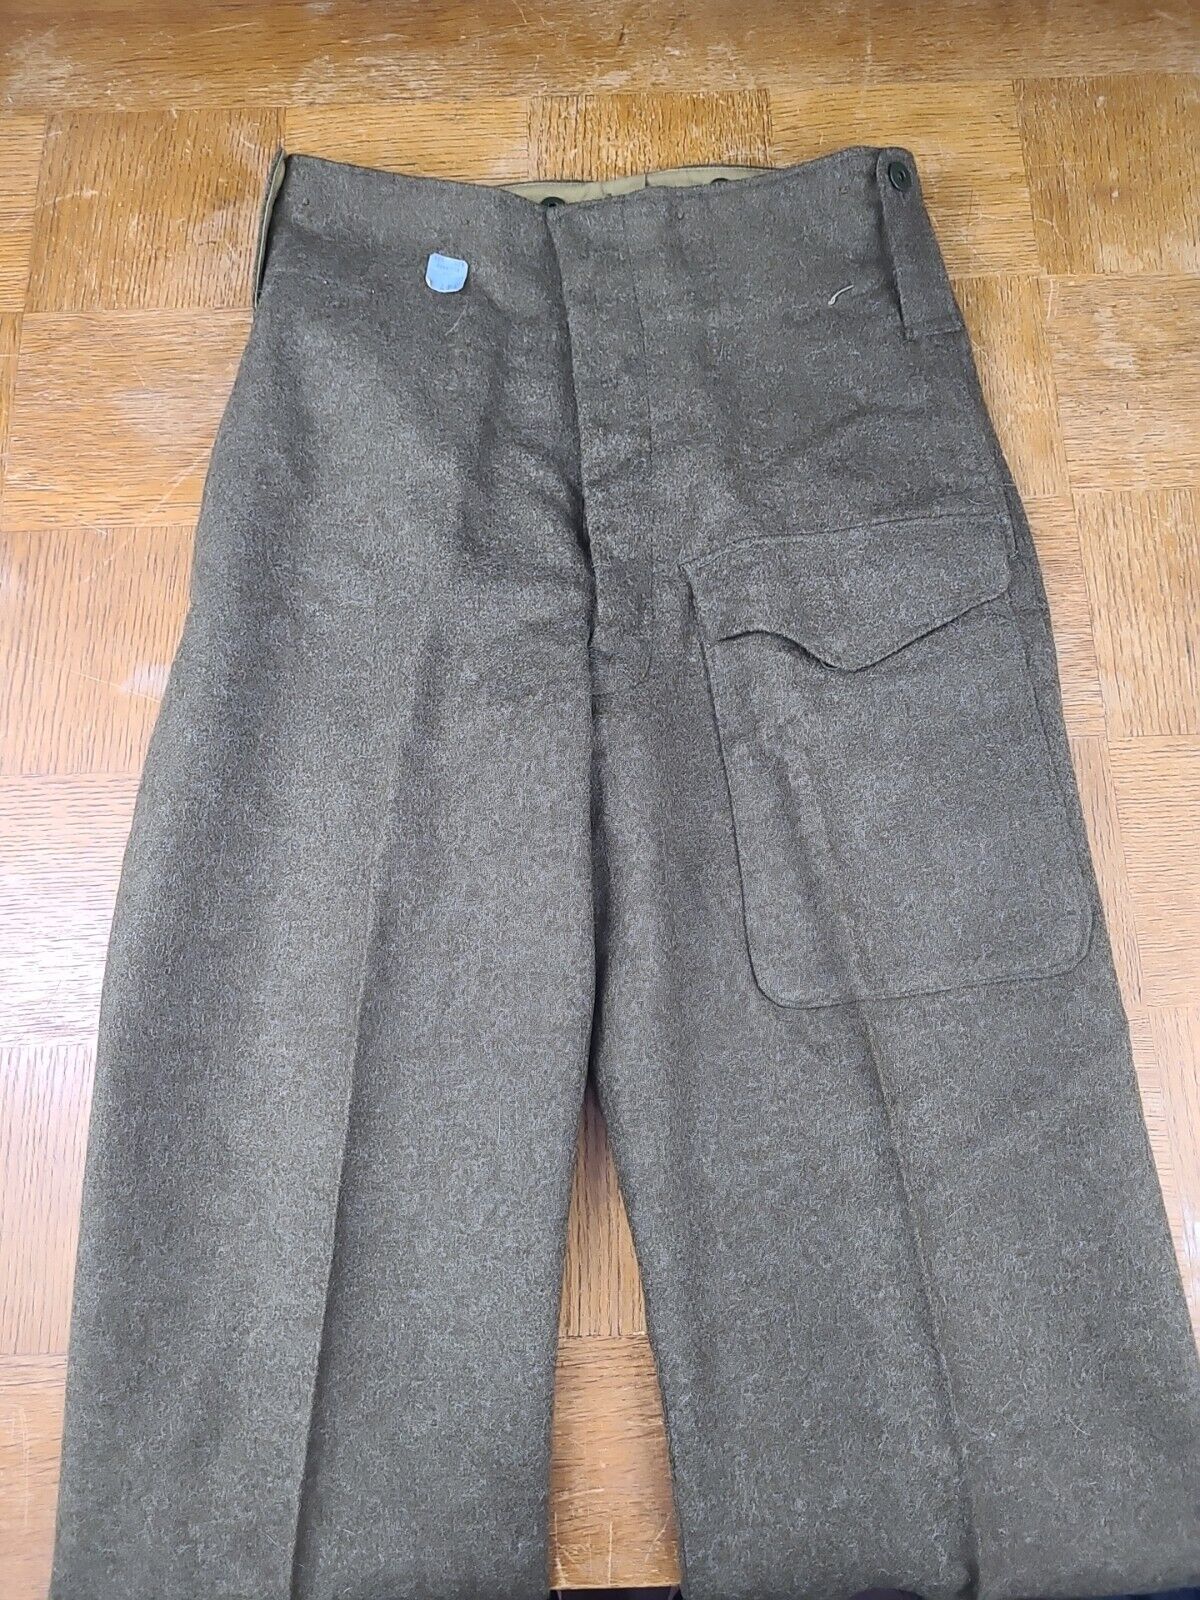 NOS 1961 Canadian Military Green Wool Battledress Khaki Trousers Pants Sz 30-31